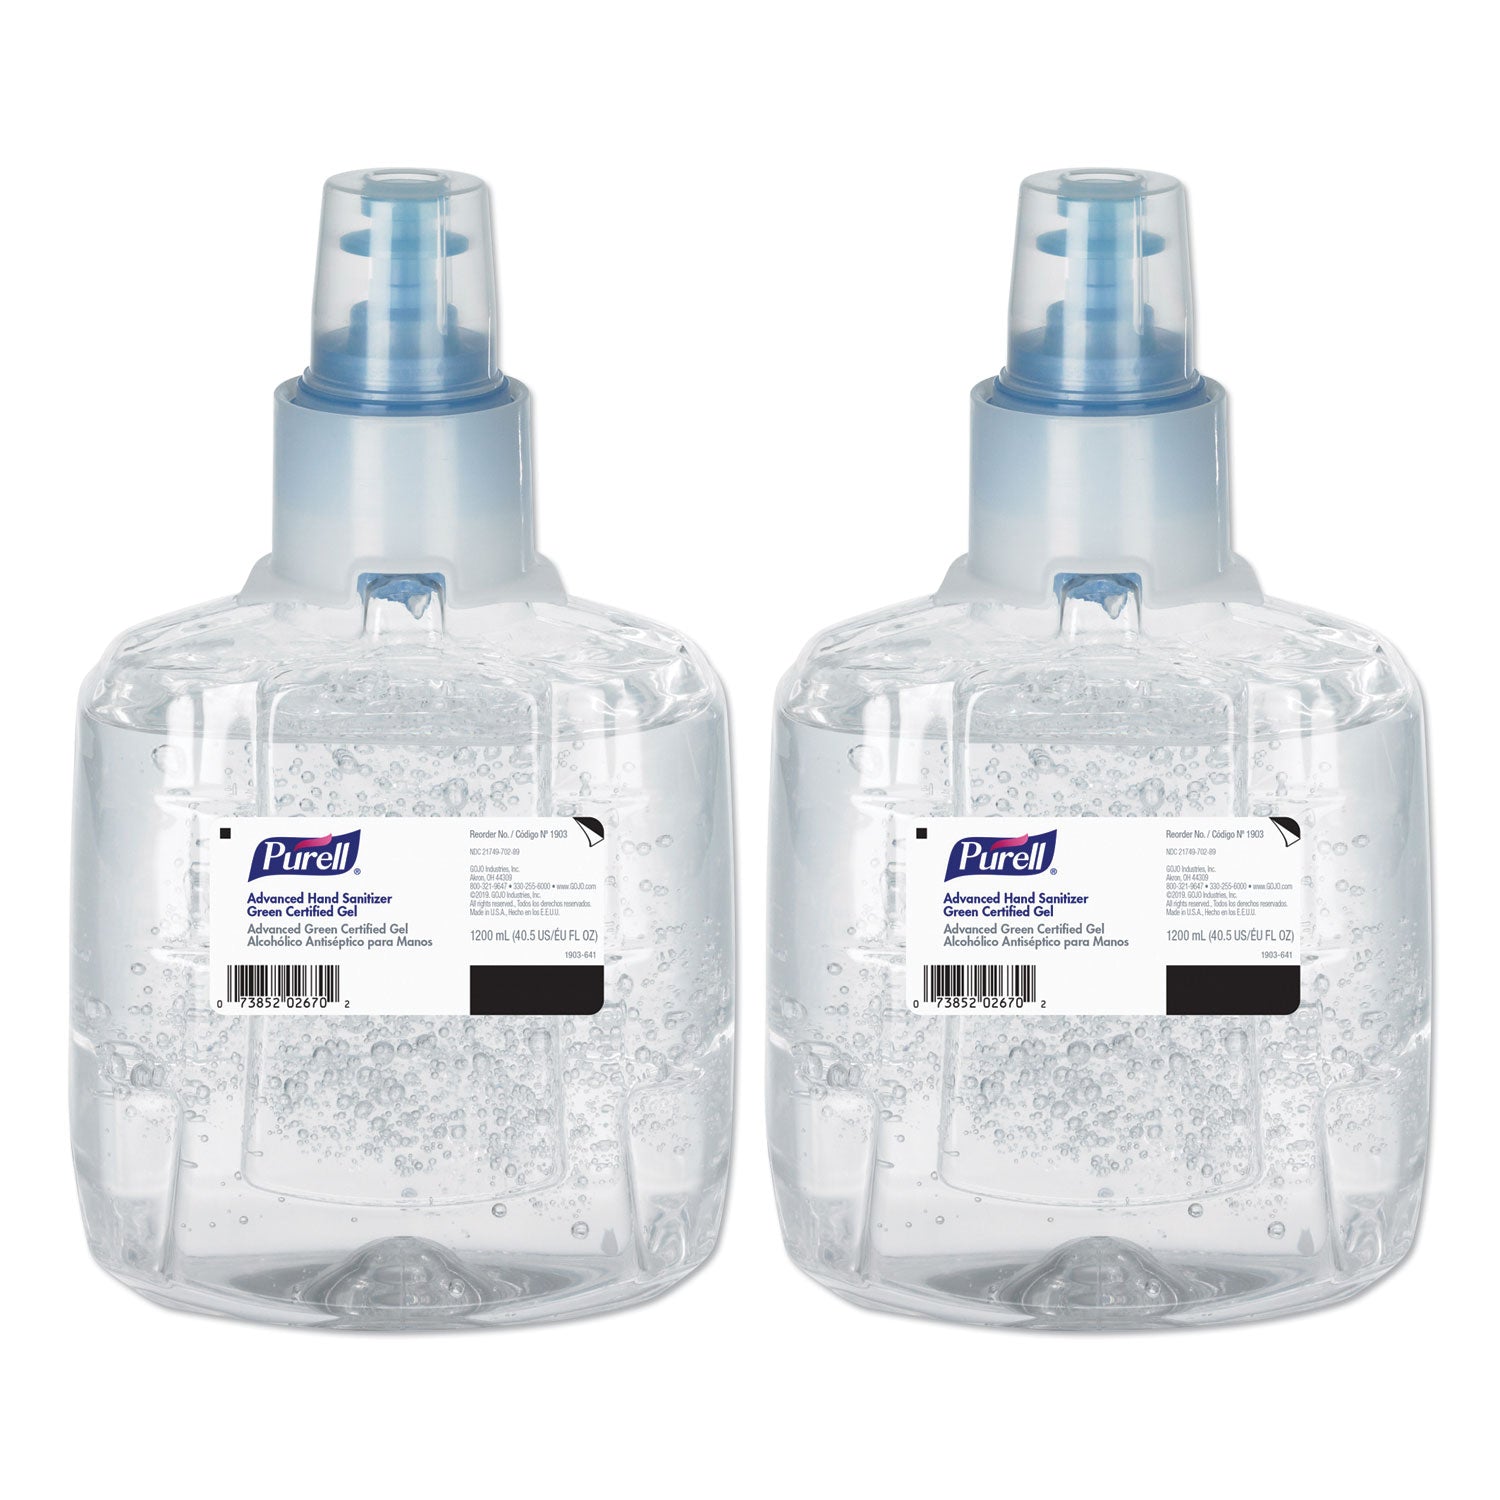 Advanced Hand Sanitizer Green Certified Gel Refill, For LTX-12 Dispensers, 1,200 mL, Fragrance-Free, 2/Carton - 